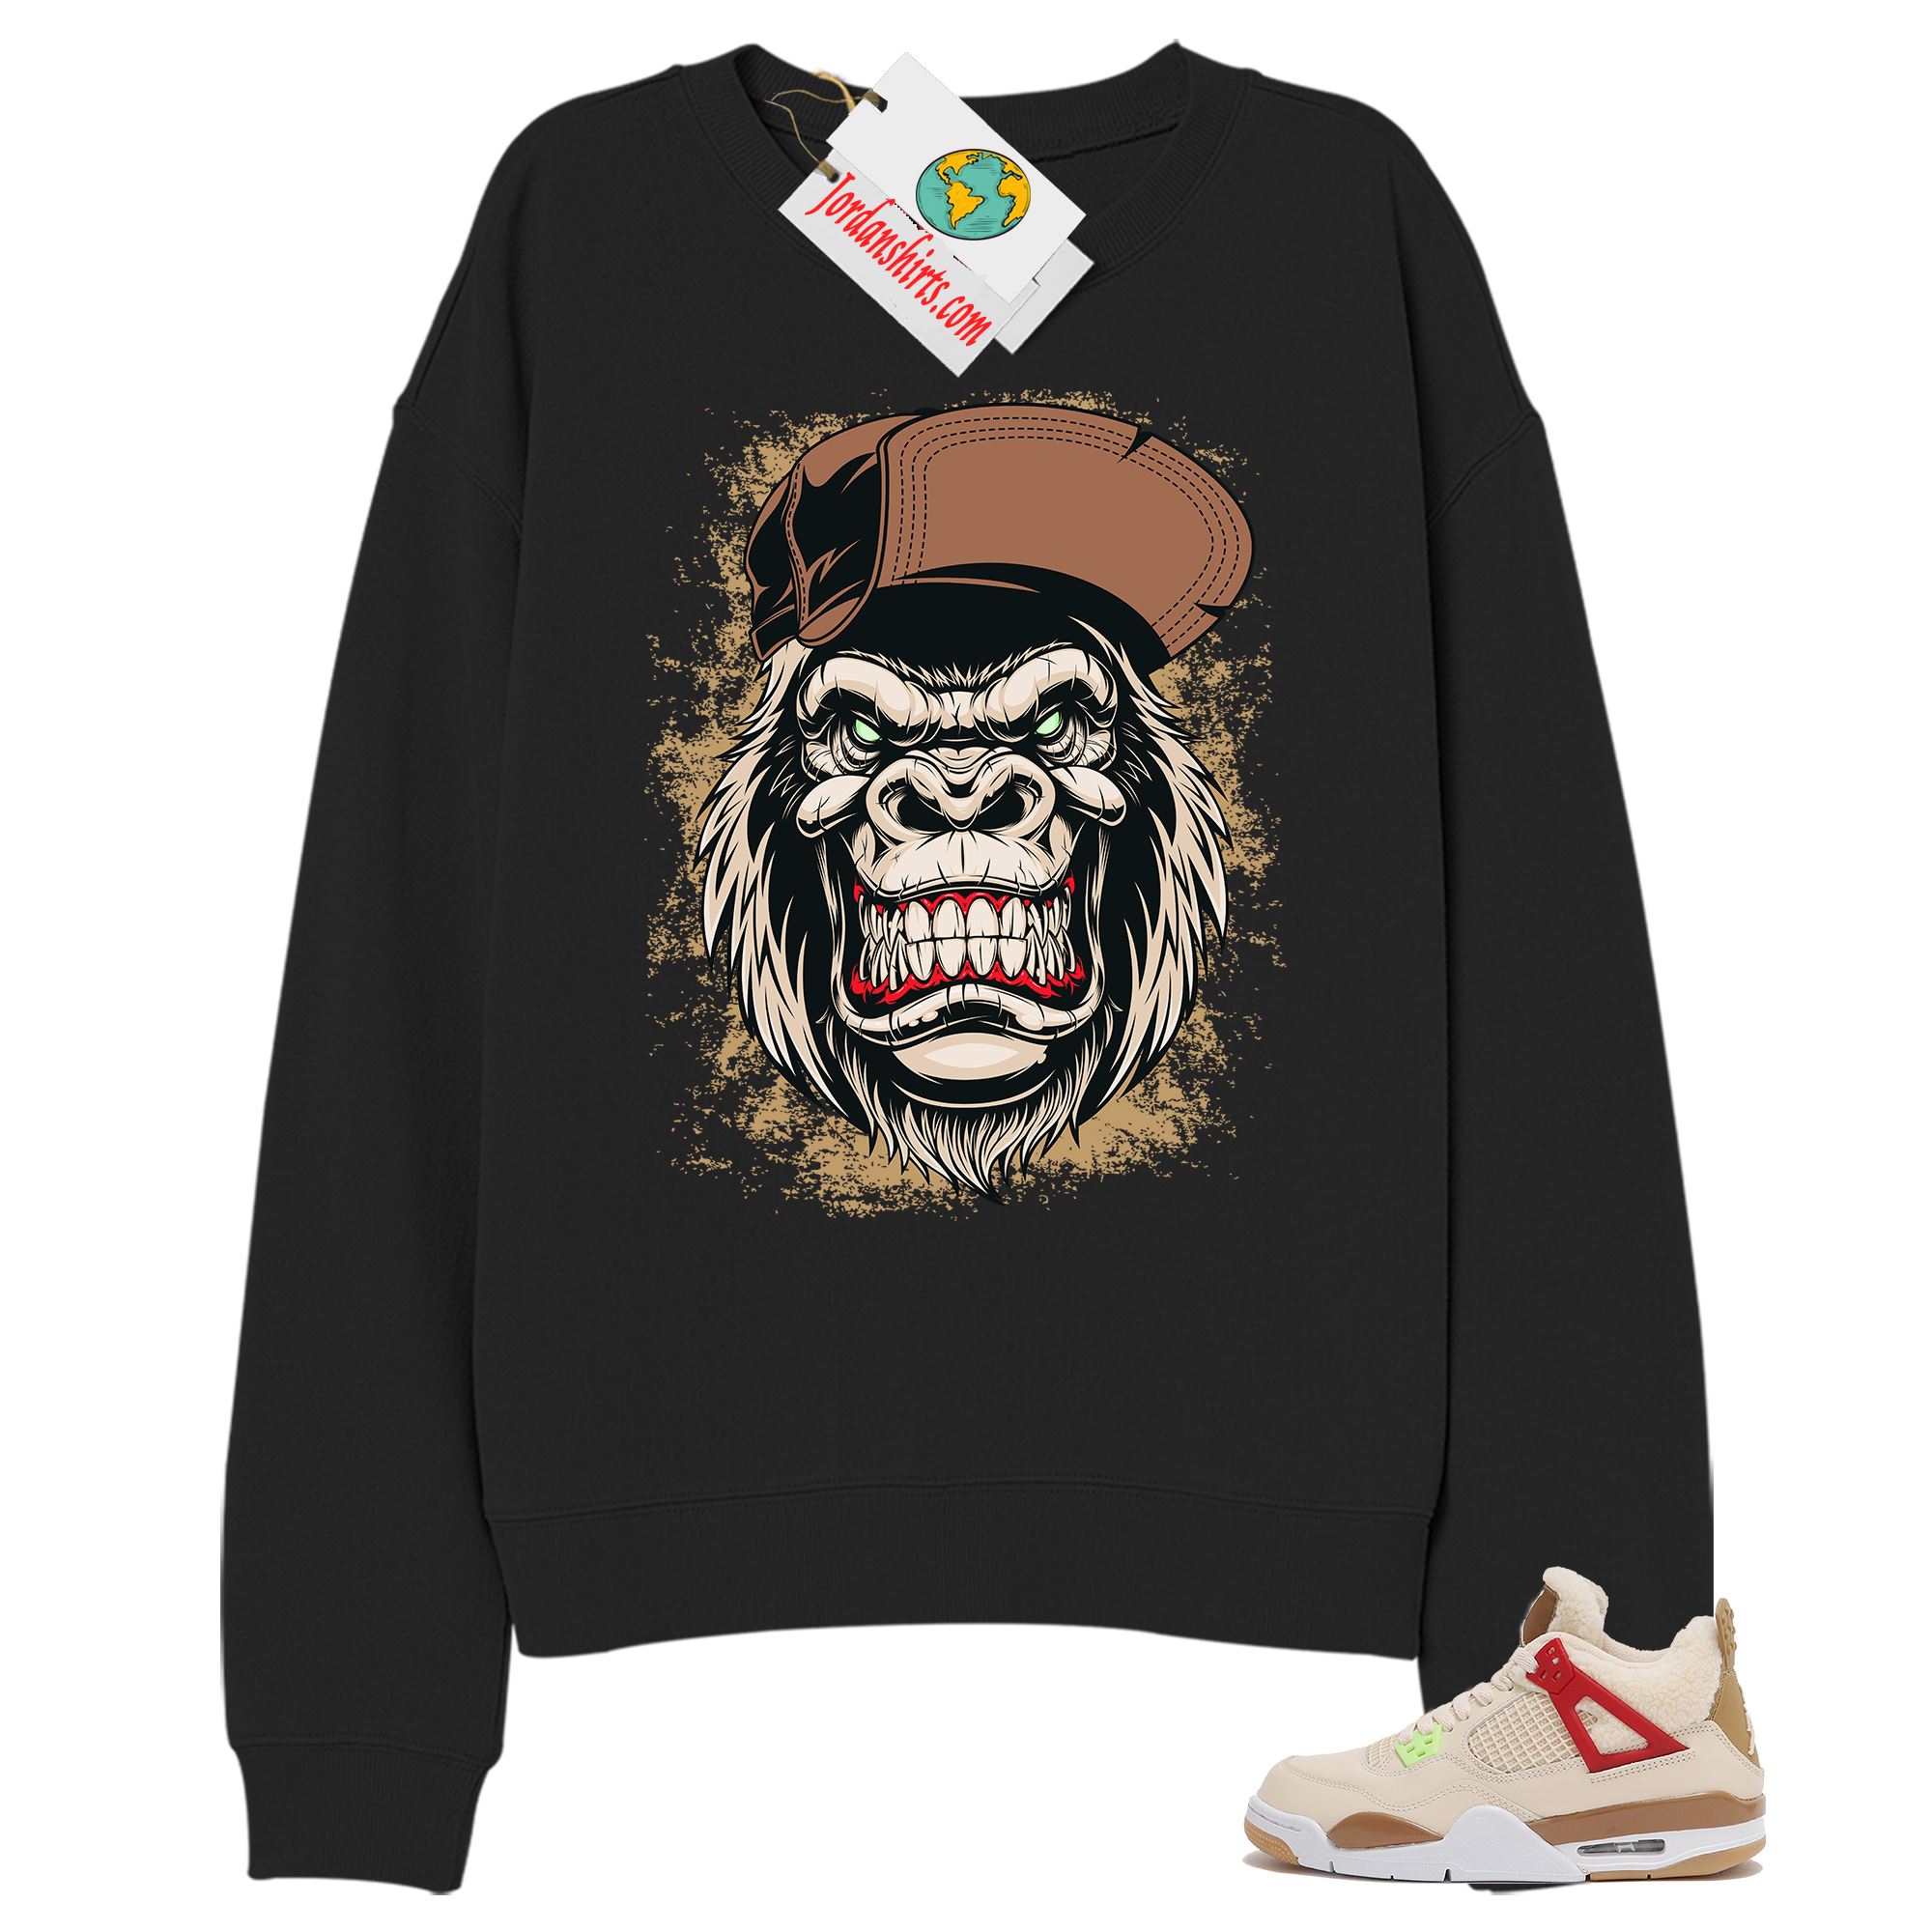 Jordan 4 Sweatshirt, Ferocious Gorilla Black Sweatshirt Air Jordan 4 Wild Things 4s Size Up To 5xl